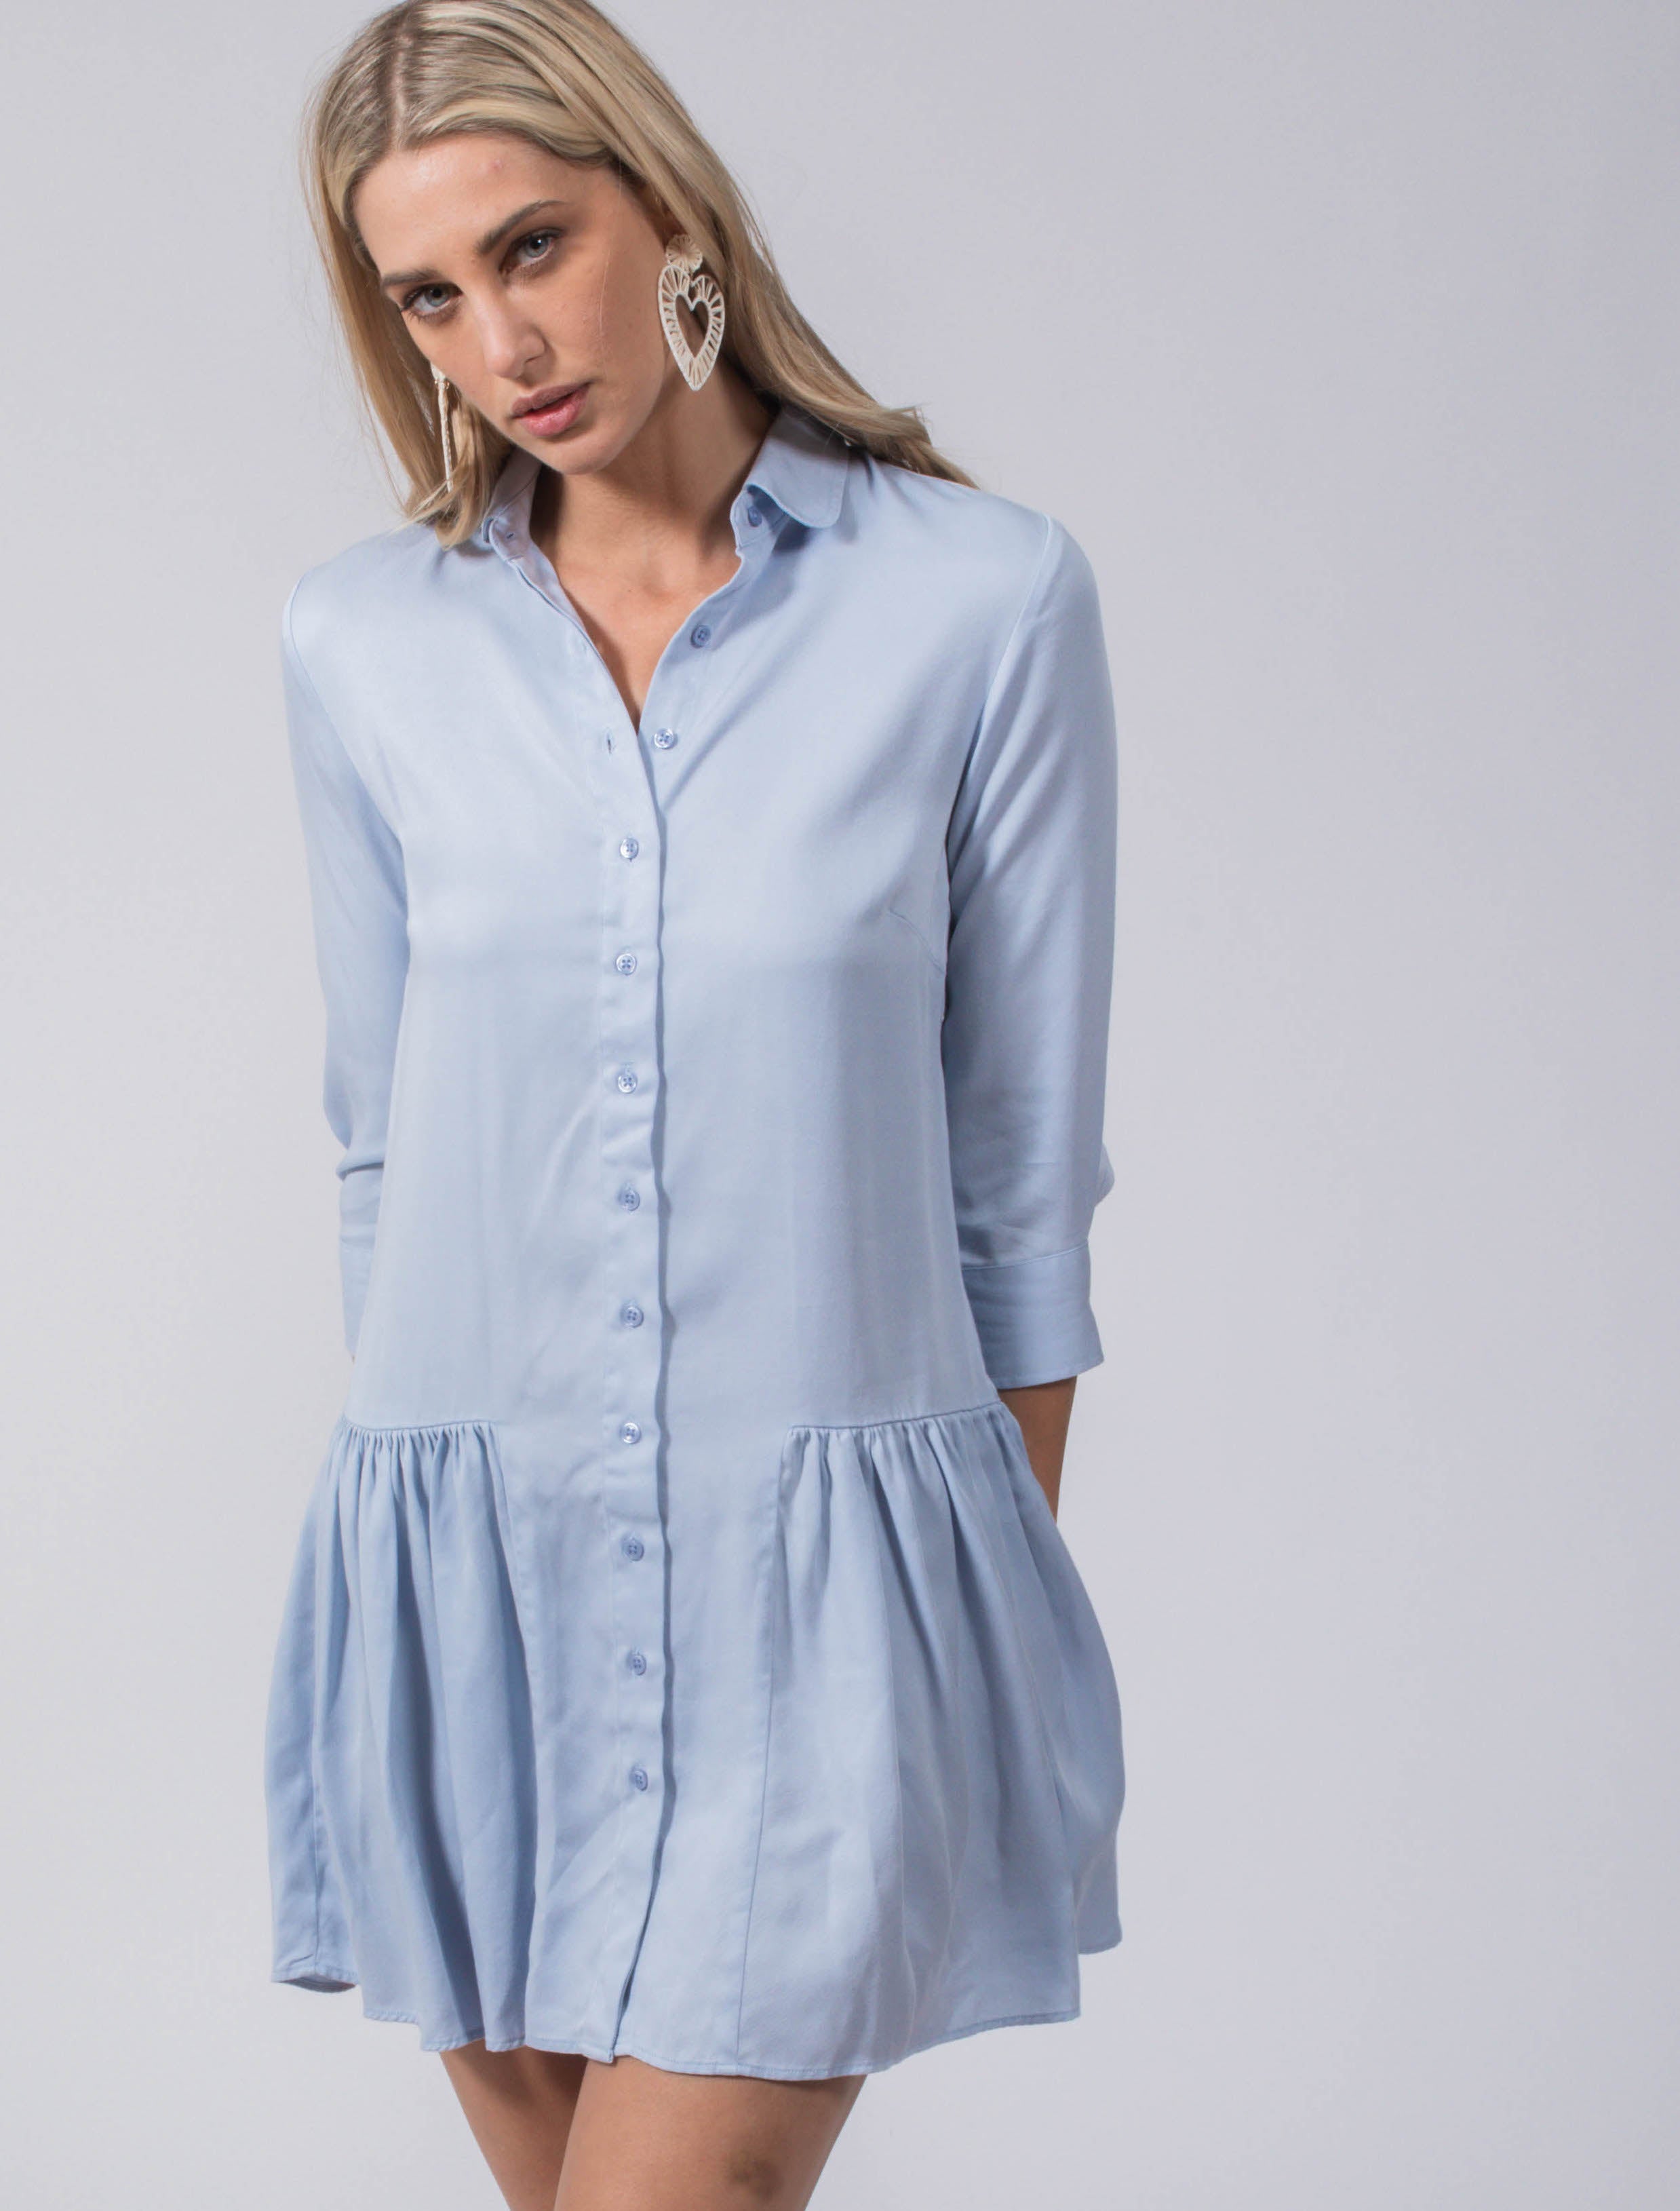 The Shirt by Rochelle Behrens Drop Waist Plaid Flannel Shirt Dress Size  Small